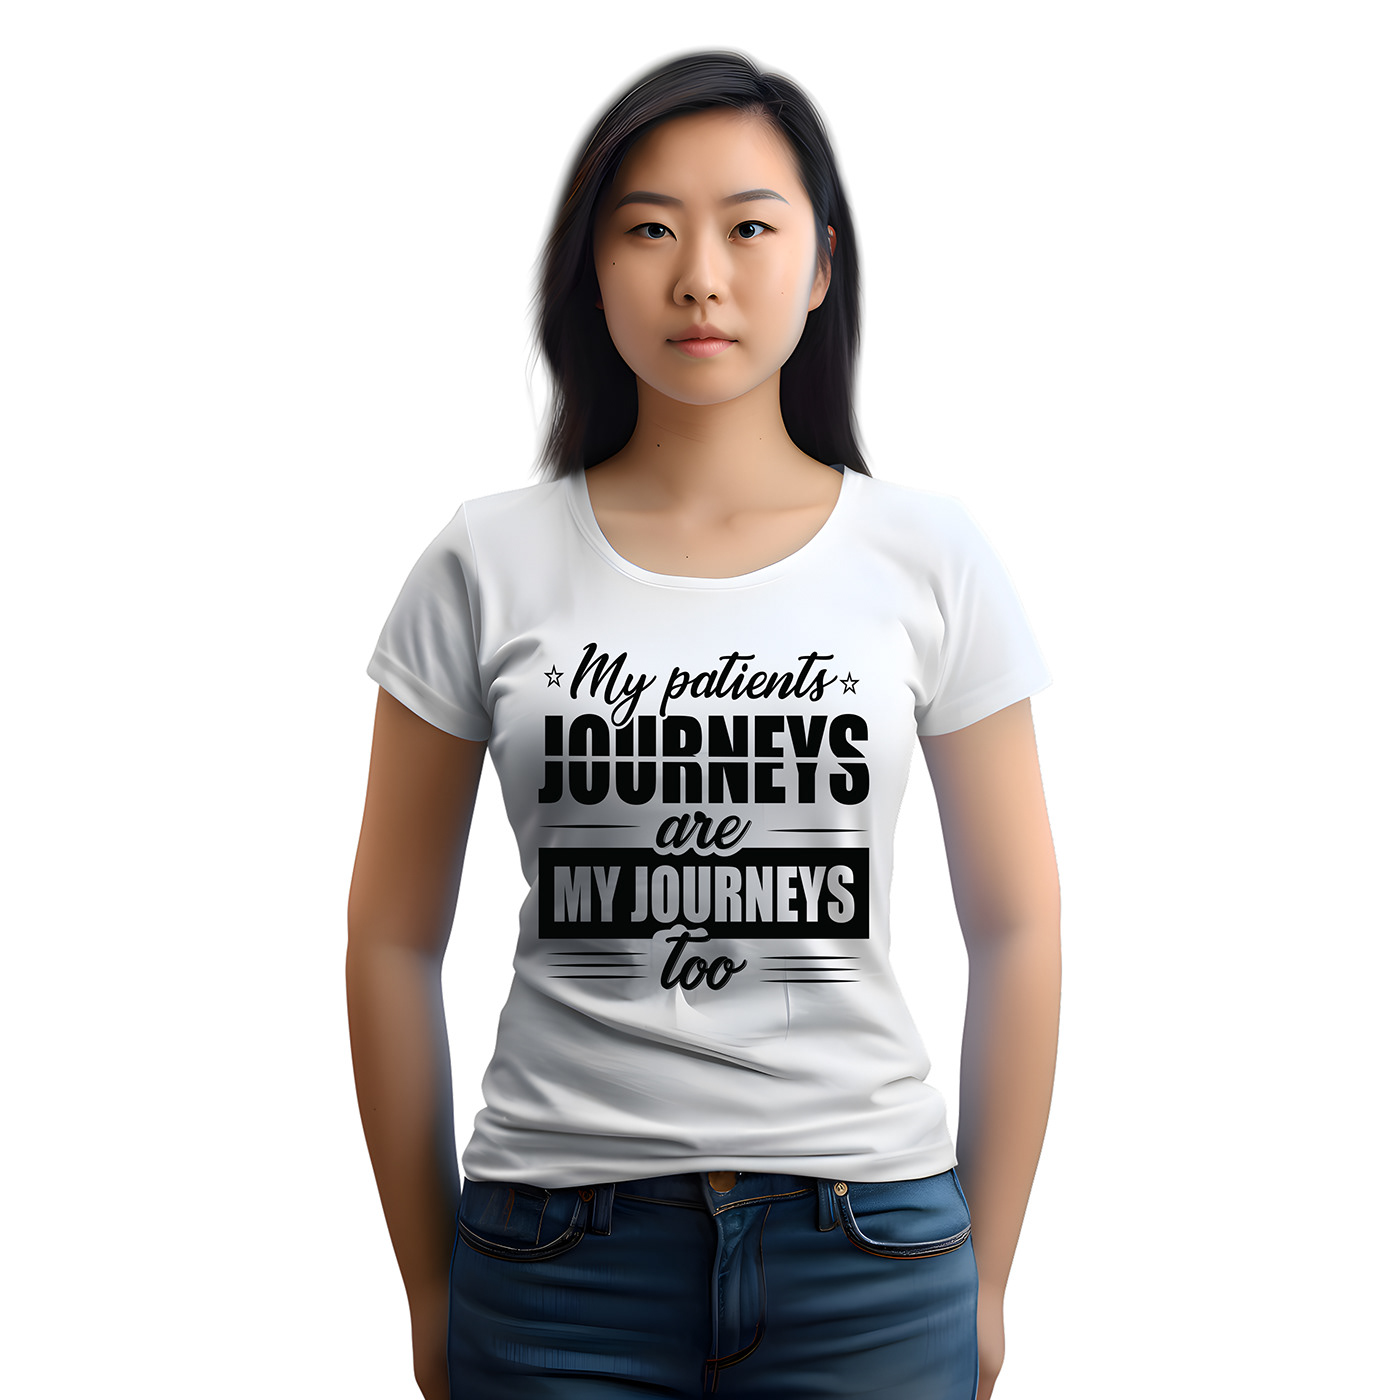 My-Patients-Journeys-are-My-Journeys-Too Typography T-Shirt Design